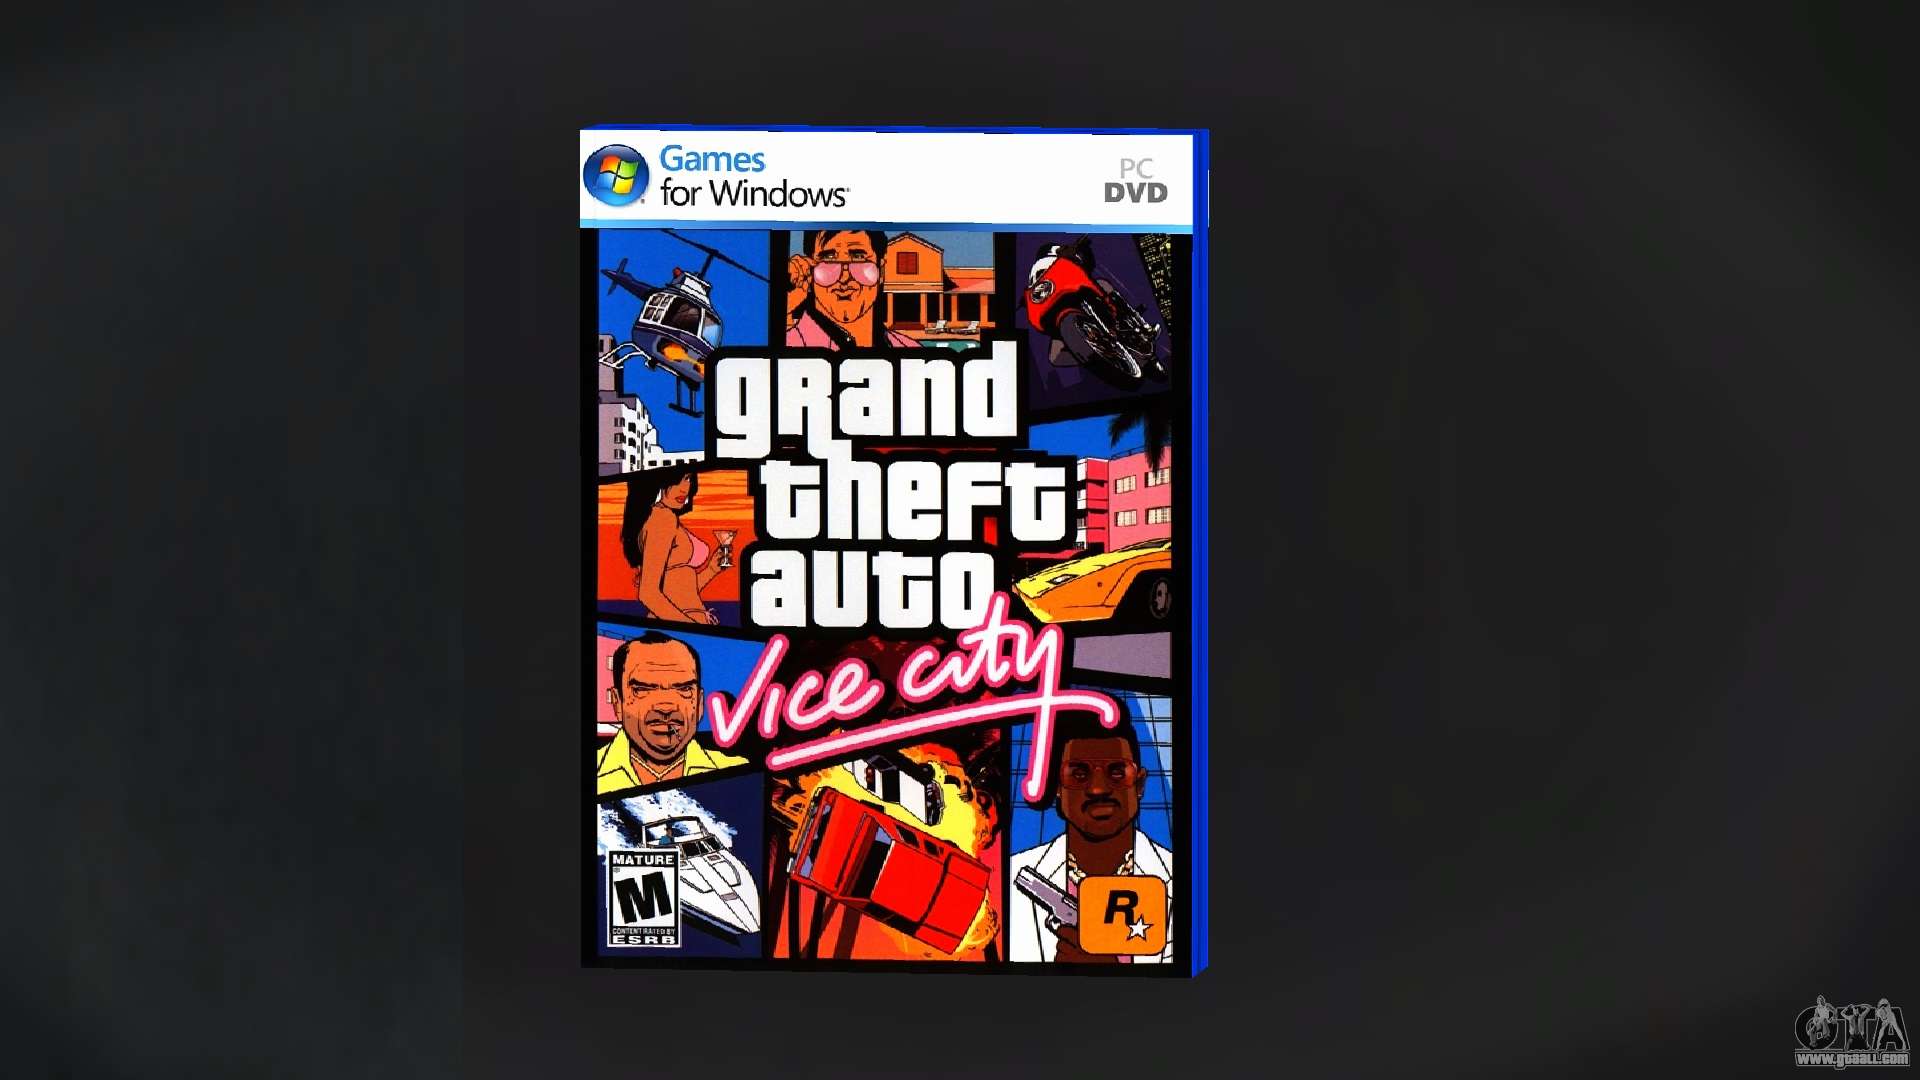 Grand Theft Auto - Vice City (Mobile version) : r/GtaViceCity